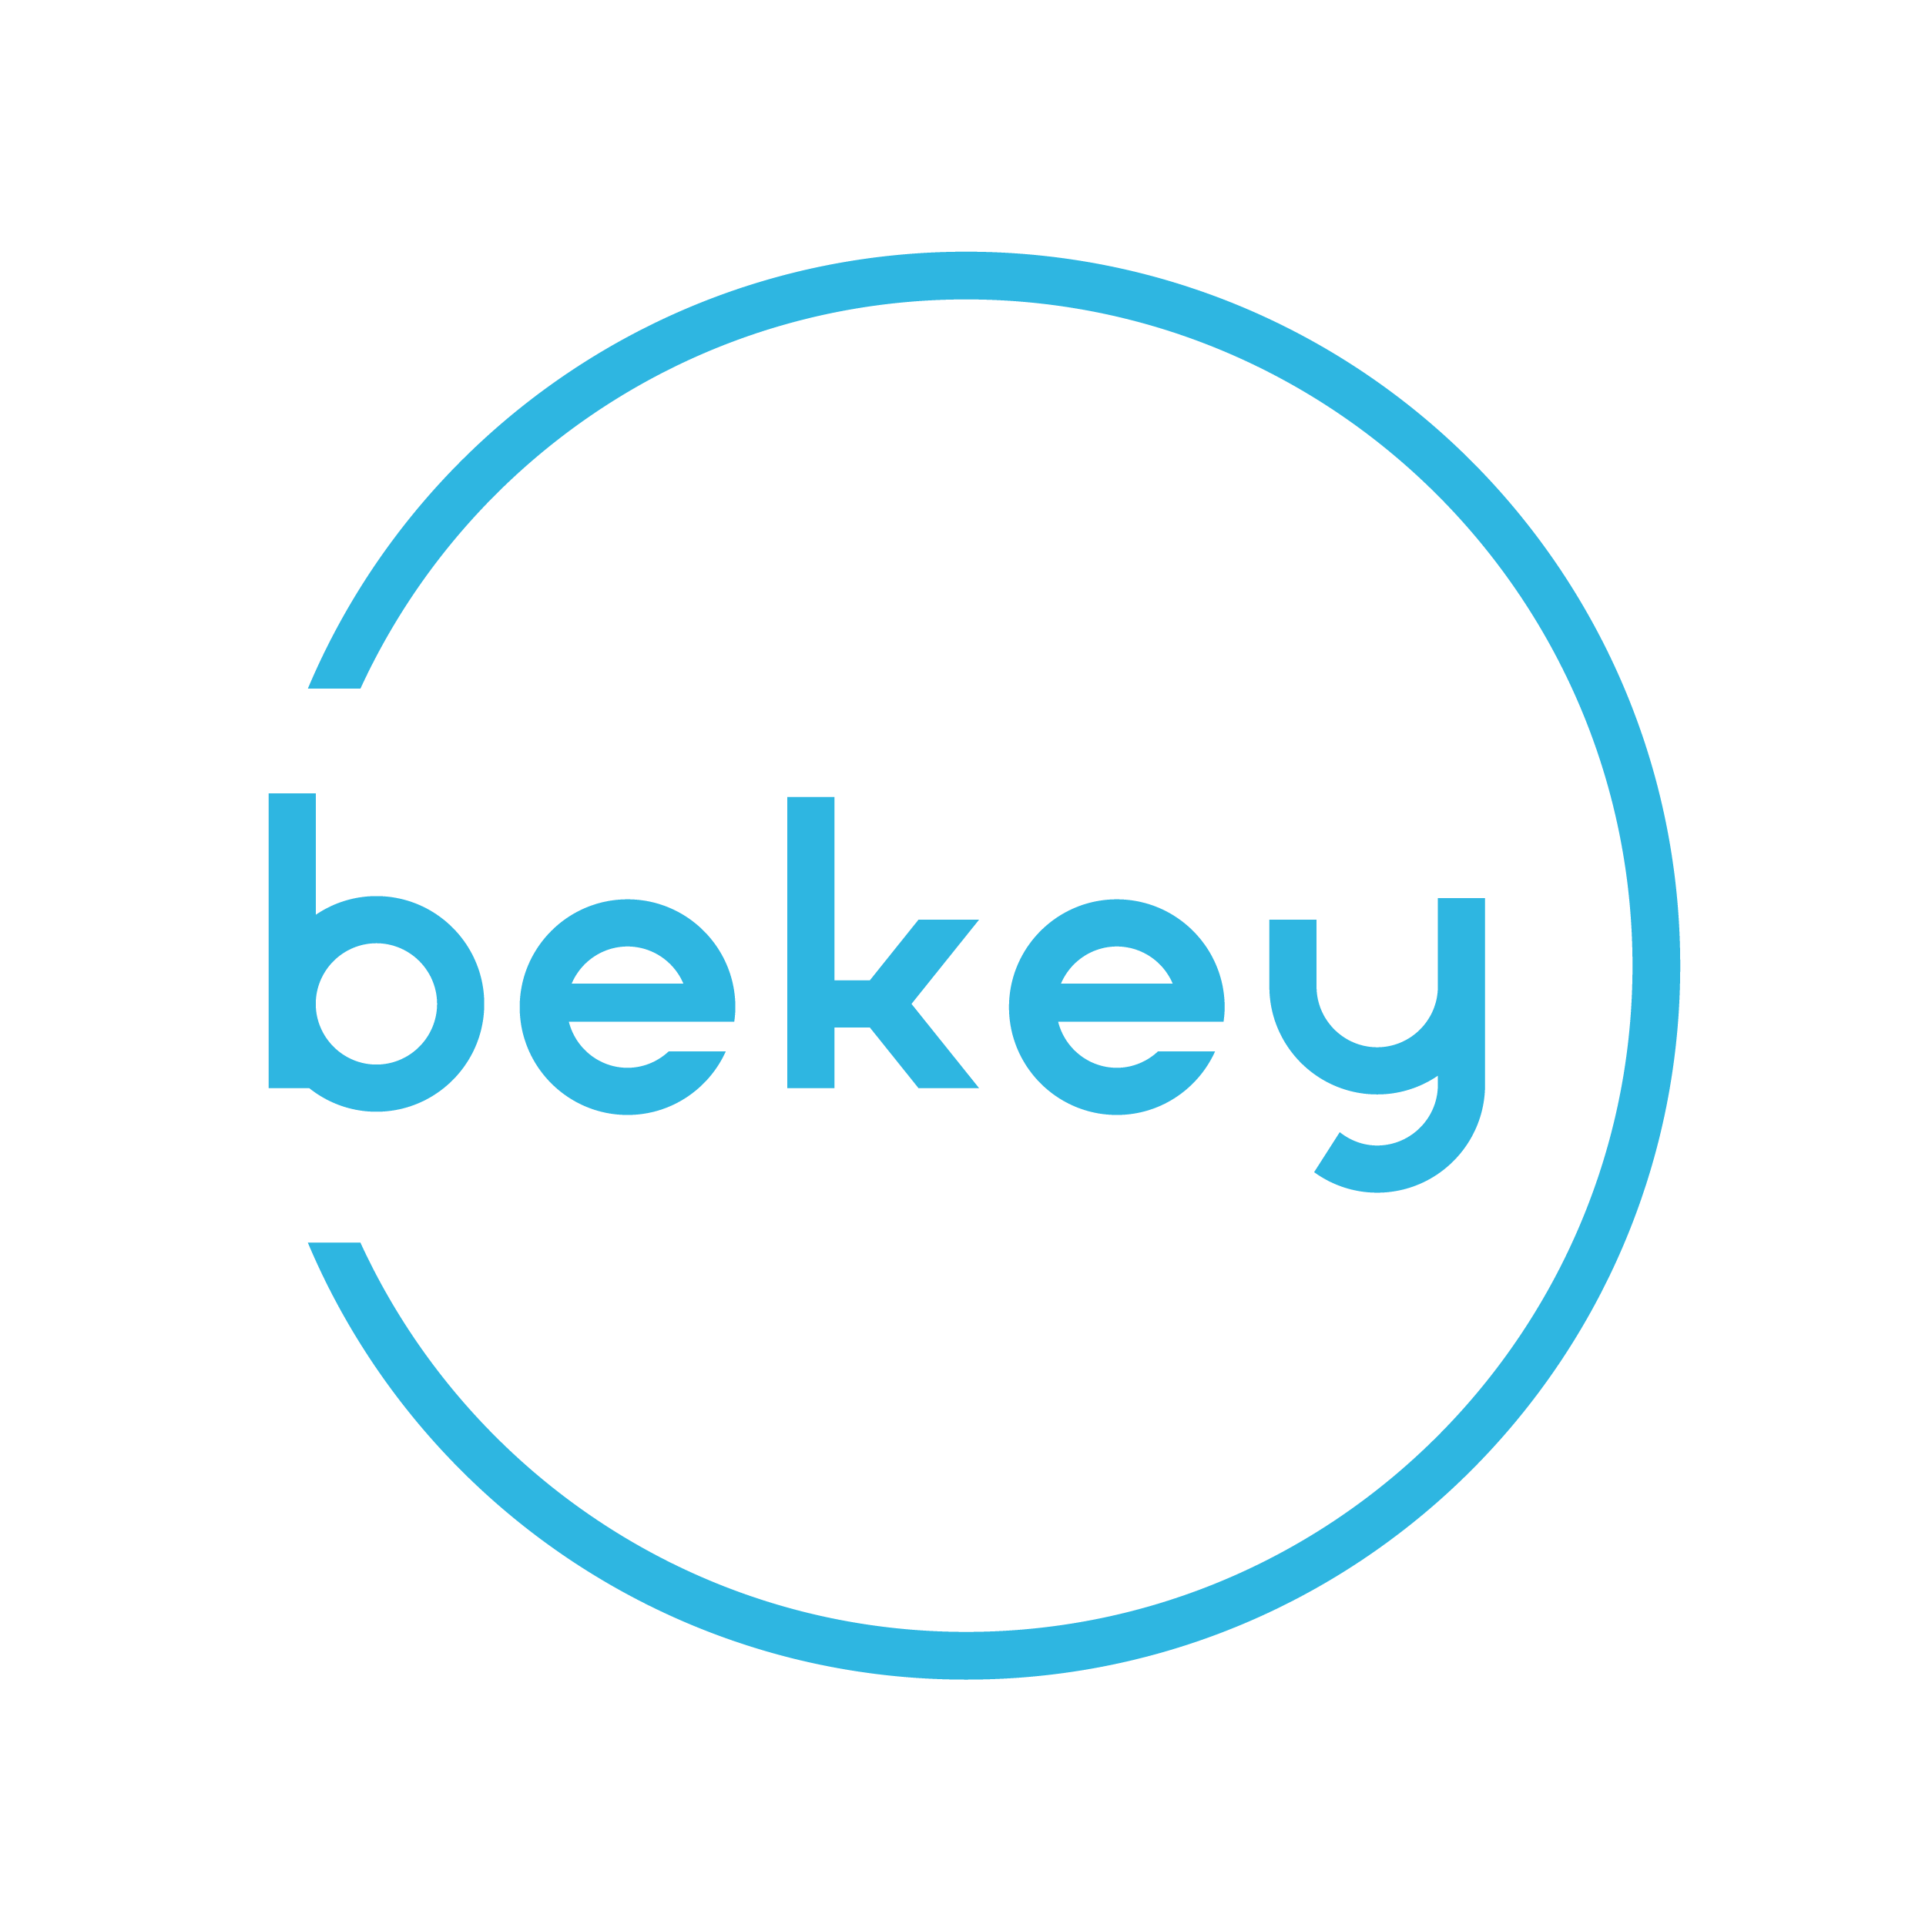 BEKEYs logo